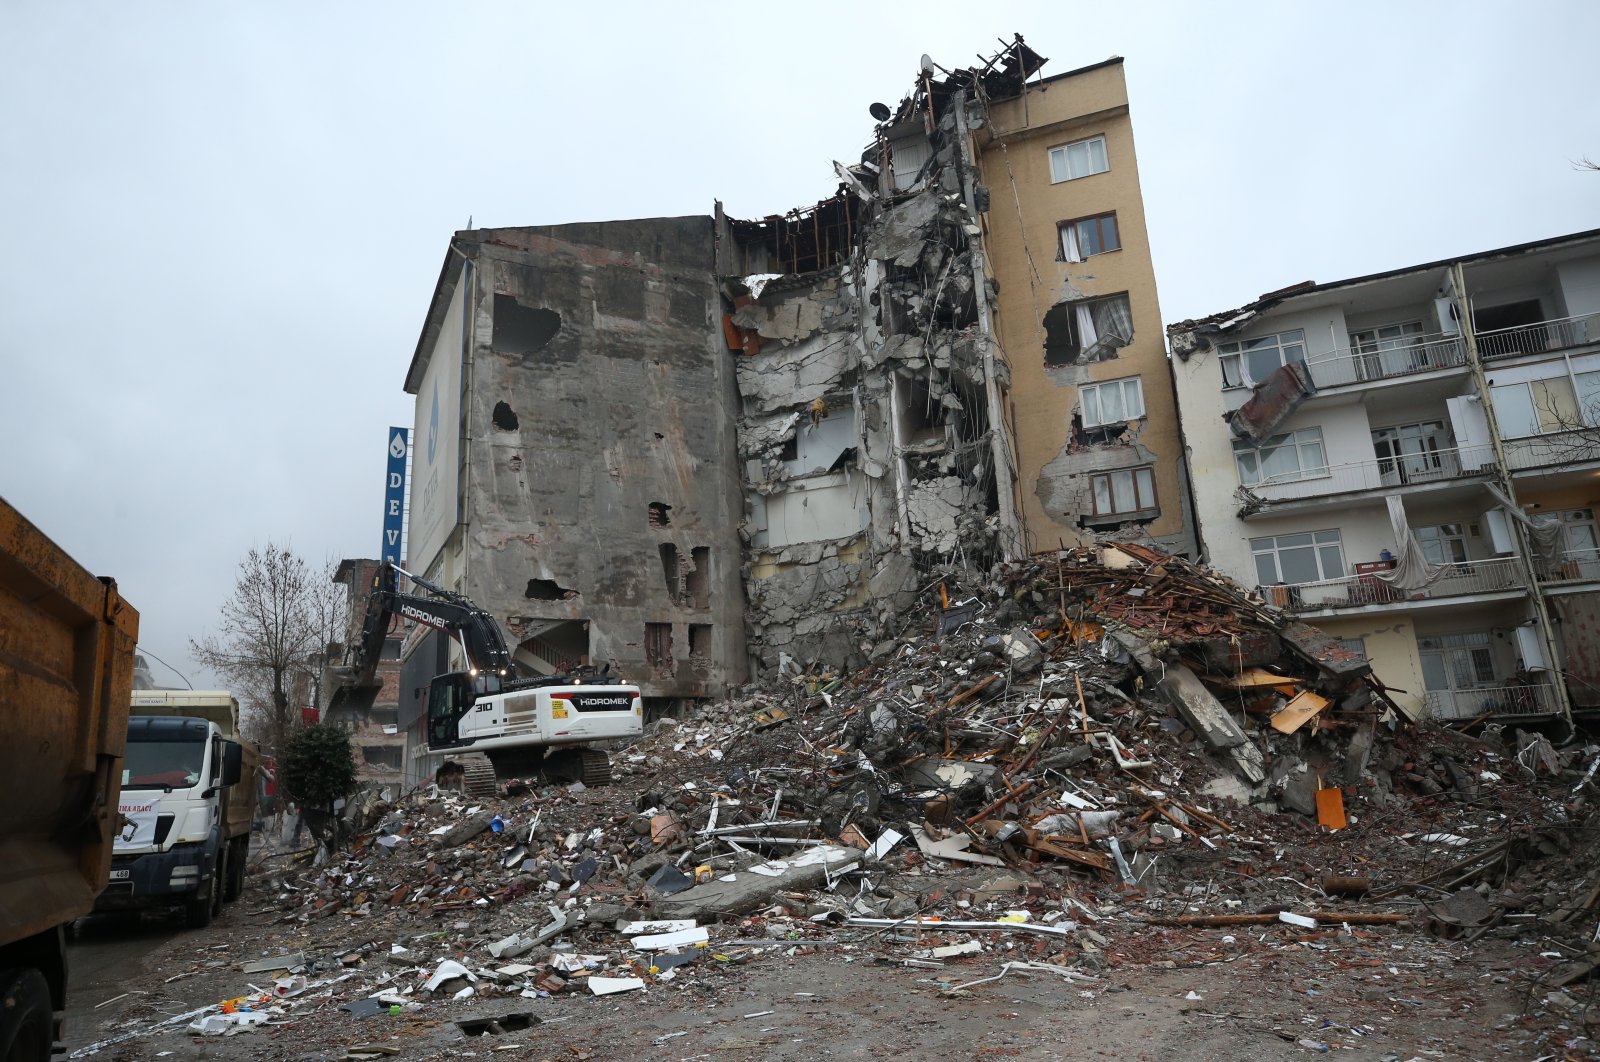 Crews demolish a building heavily damaged in the earthquakes, in Malatya, southeastern Türkiye, March 19, 2023. (AA Photo)